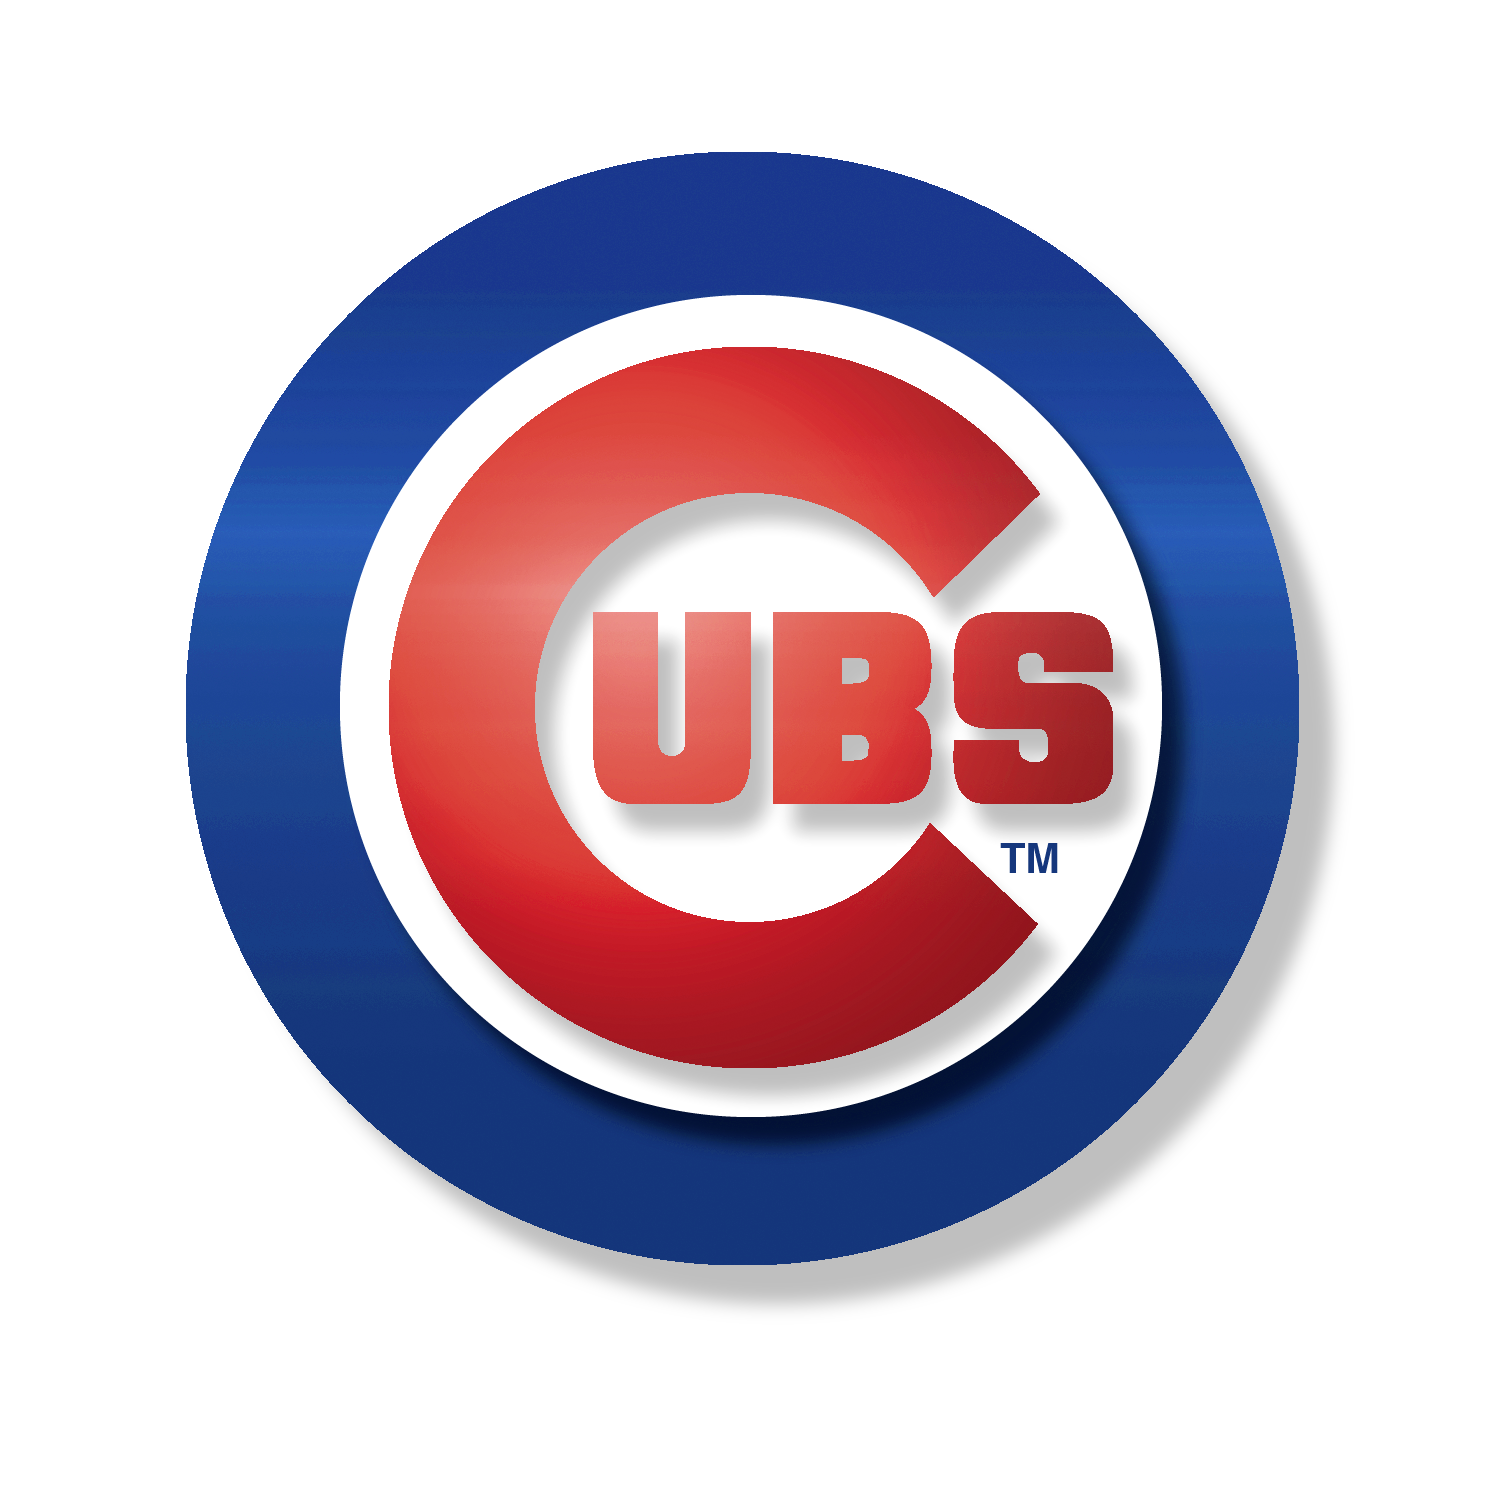 2017-organizational-review-chicago-cubs-2080-baseball